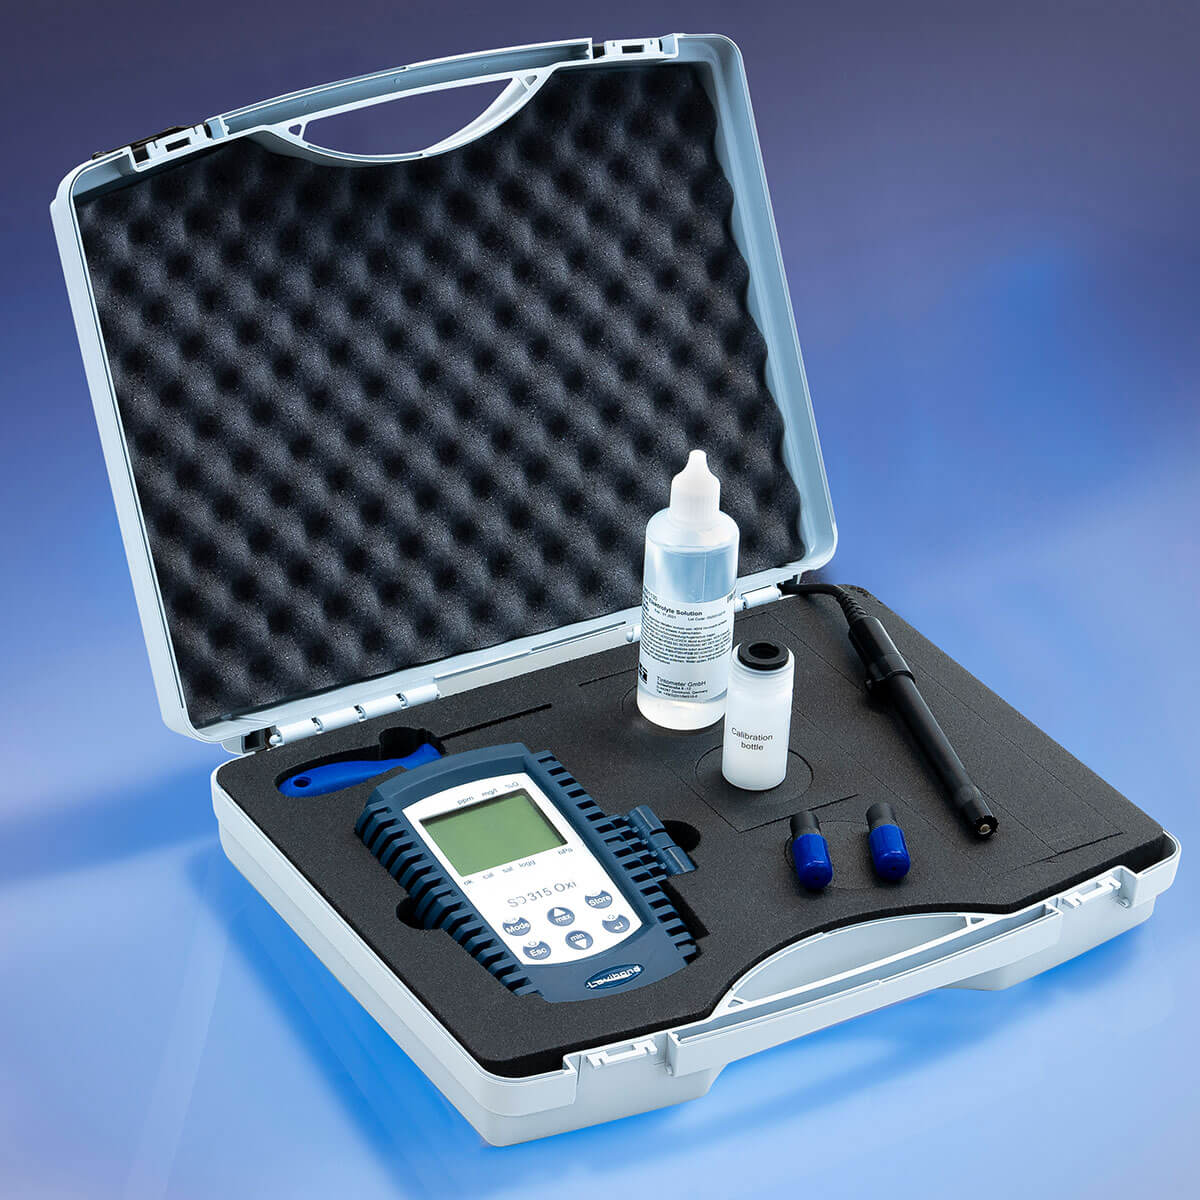 Lovibond SD 315 Portable Dissolved Oxygen/Temperature Kit Water Testing Equipment - Cleanflow